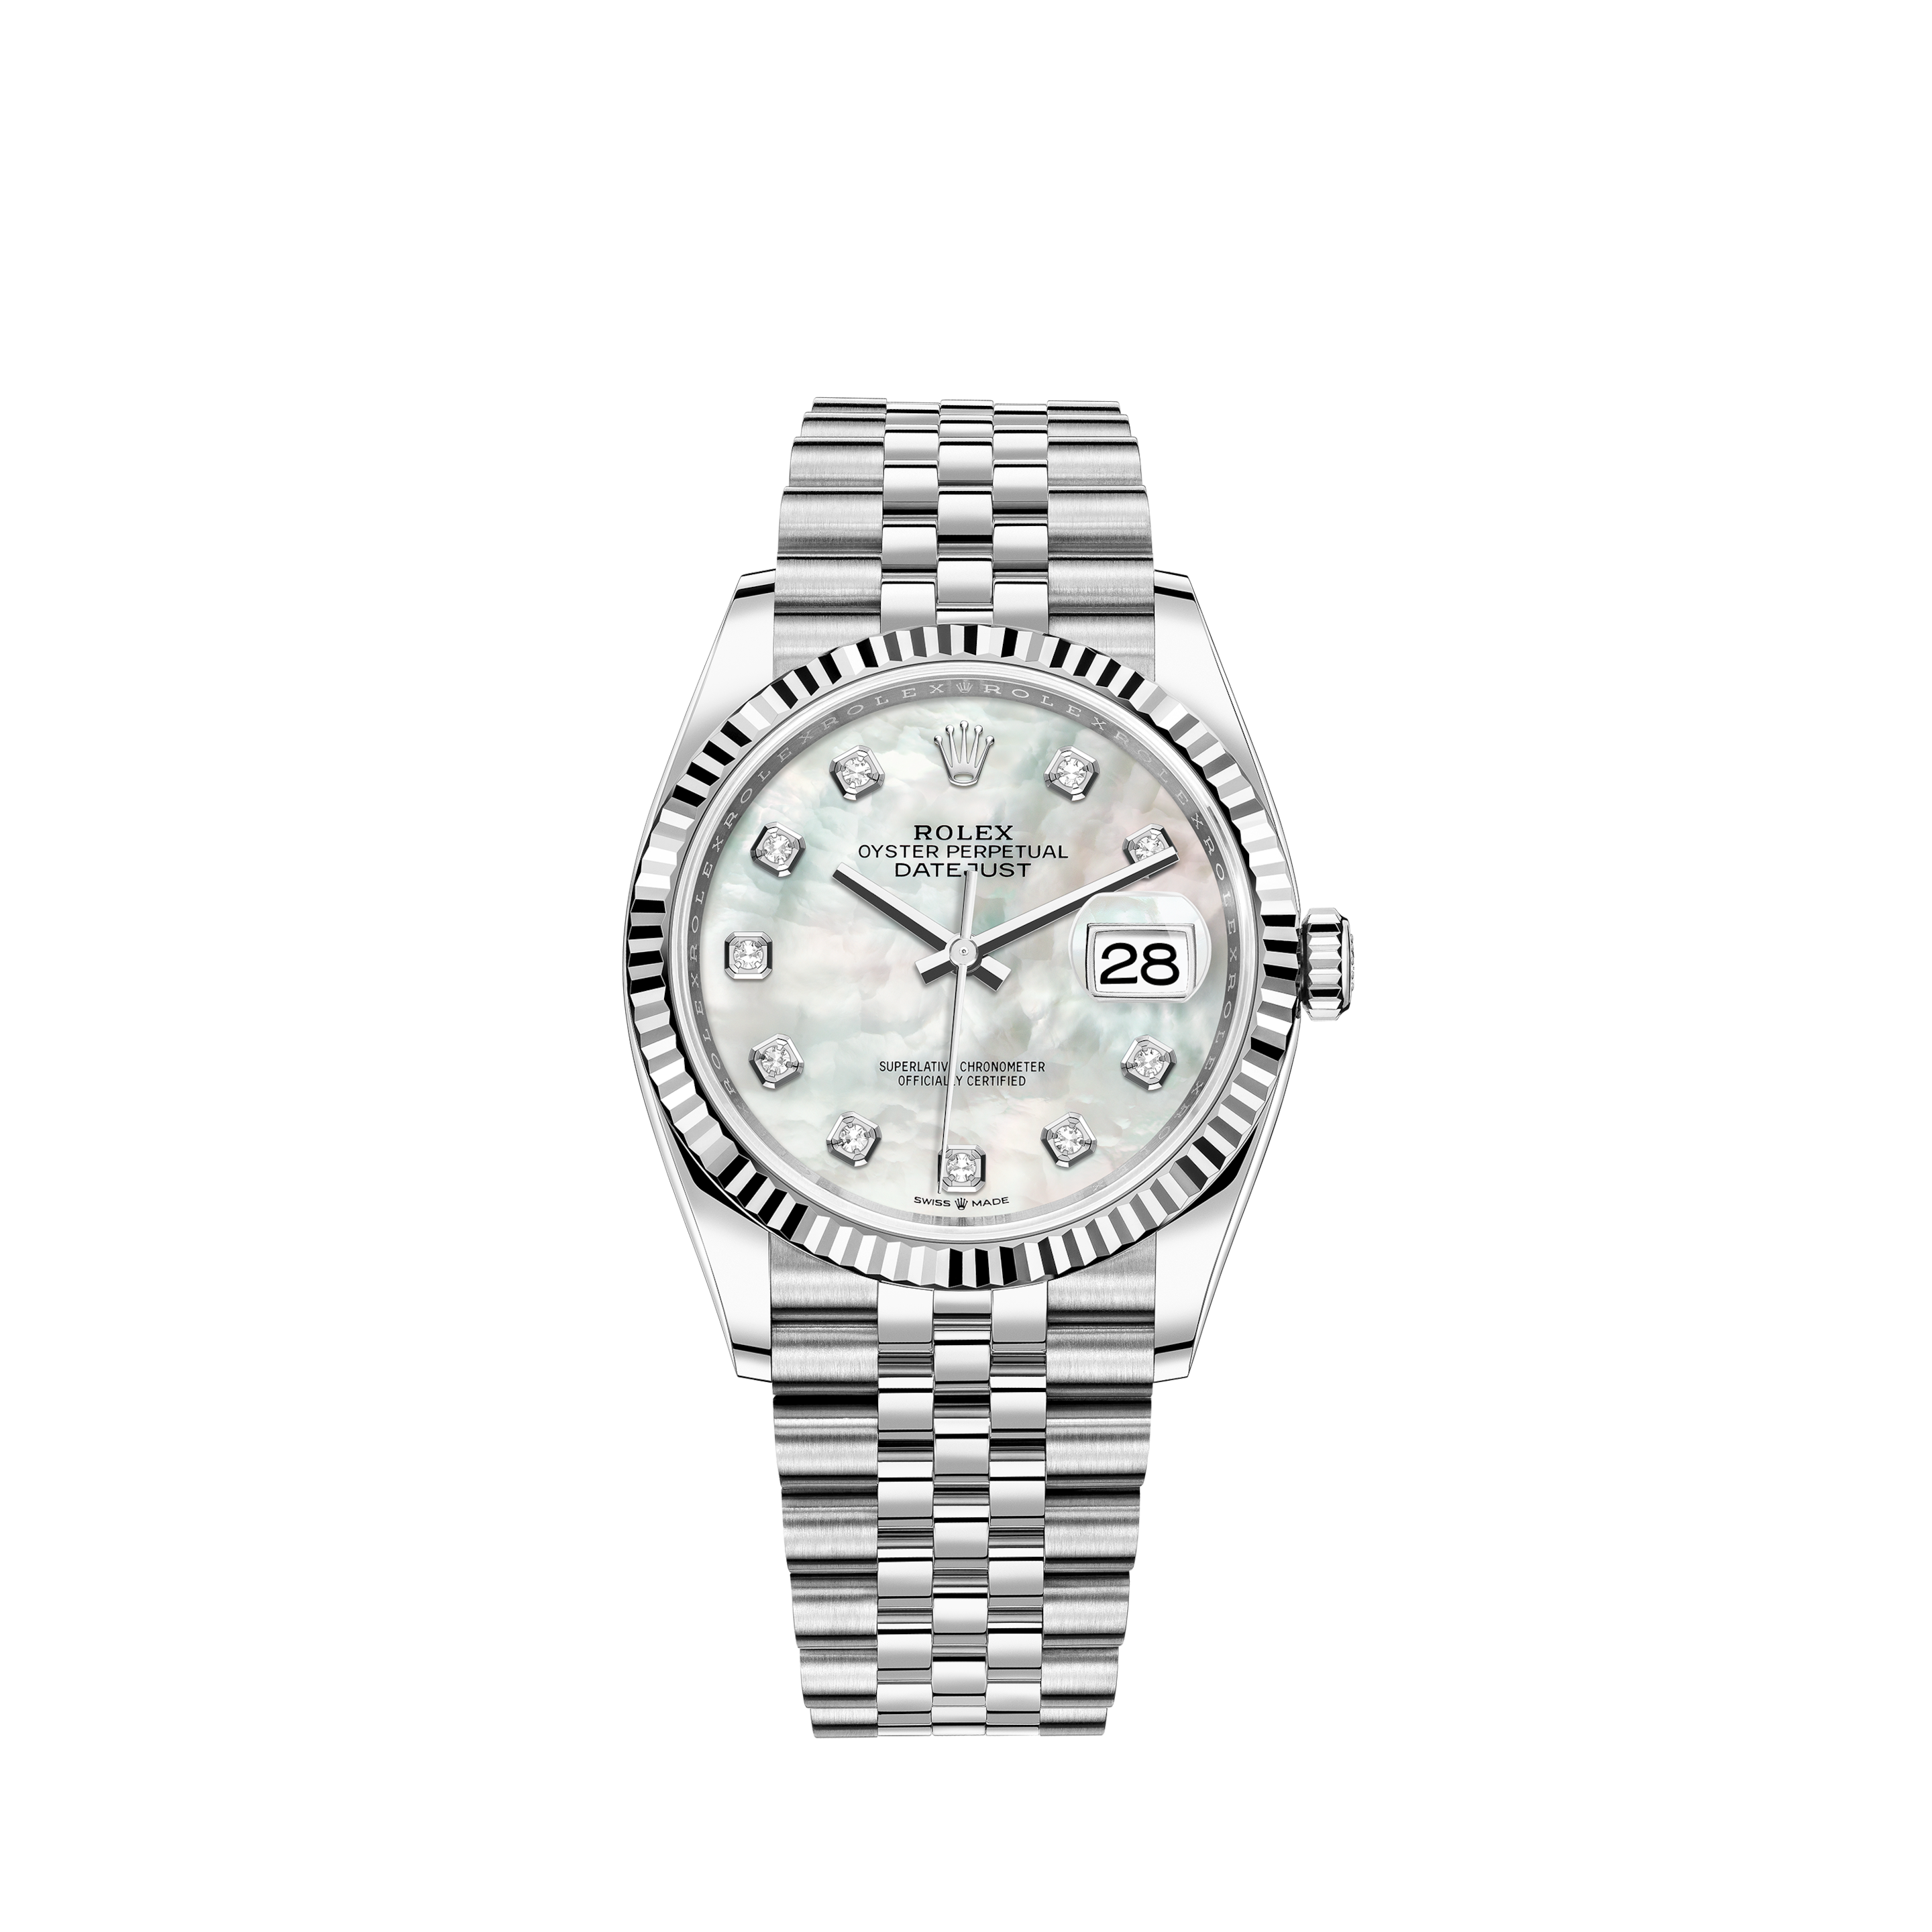 Rolex Day-Date 118389 Men's Watch in 18kt White GoldRolex Day-Date 118389A